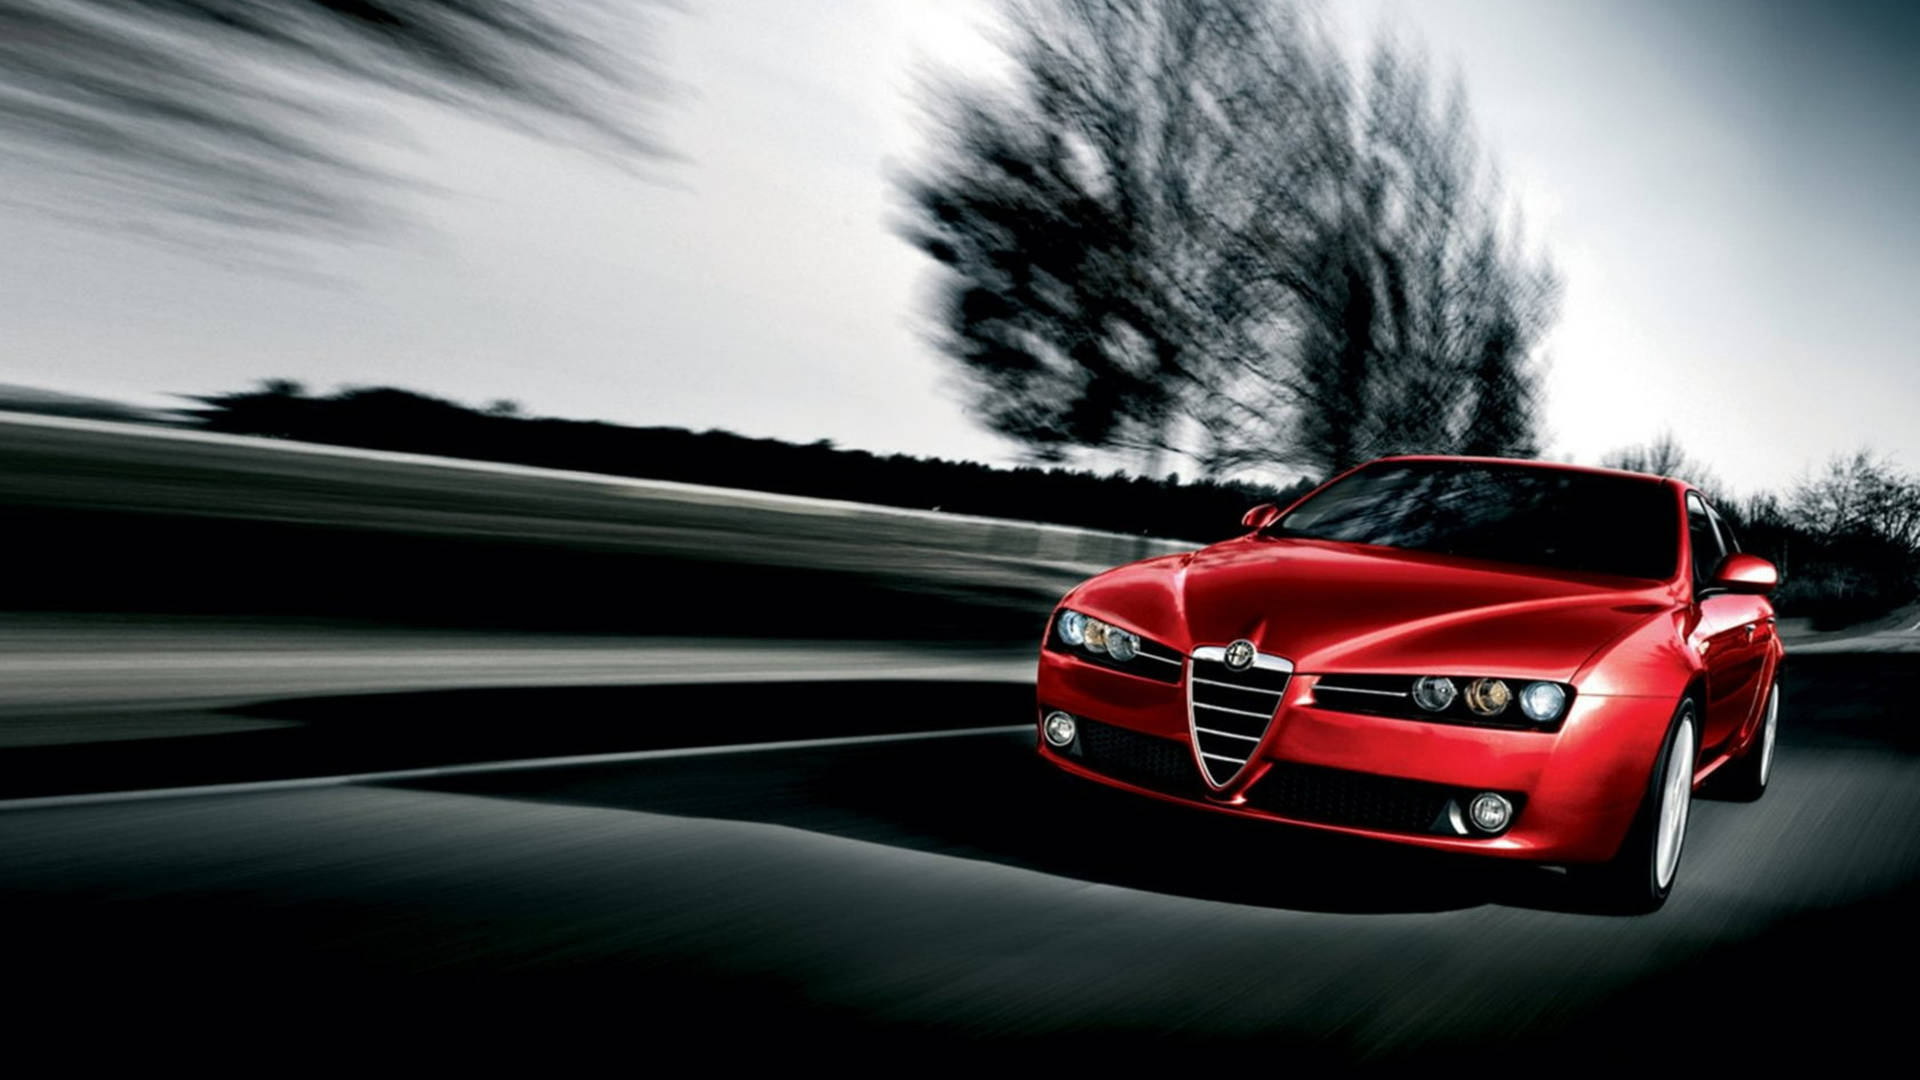 Speeding Red Alfa Romeo 159